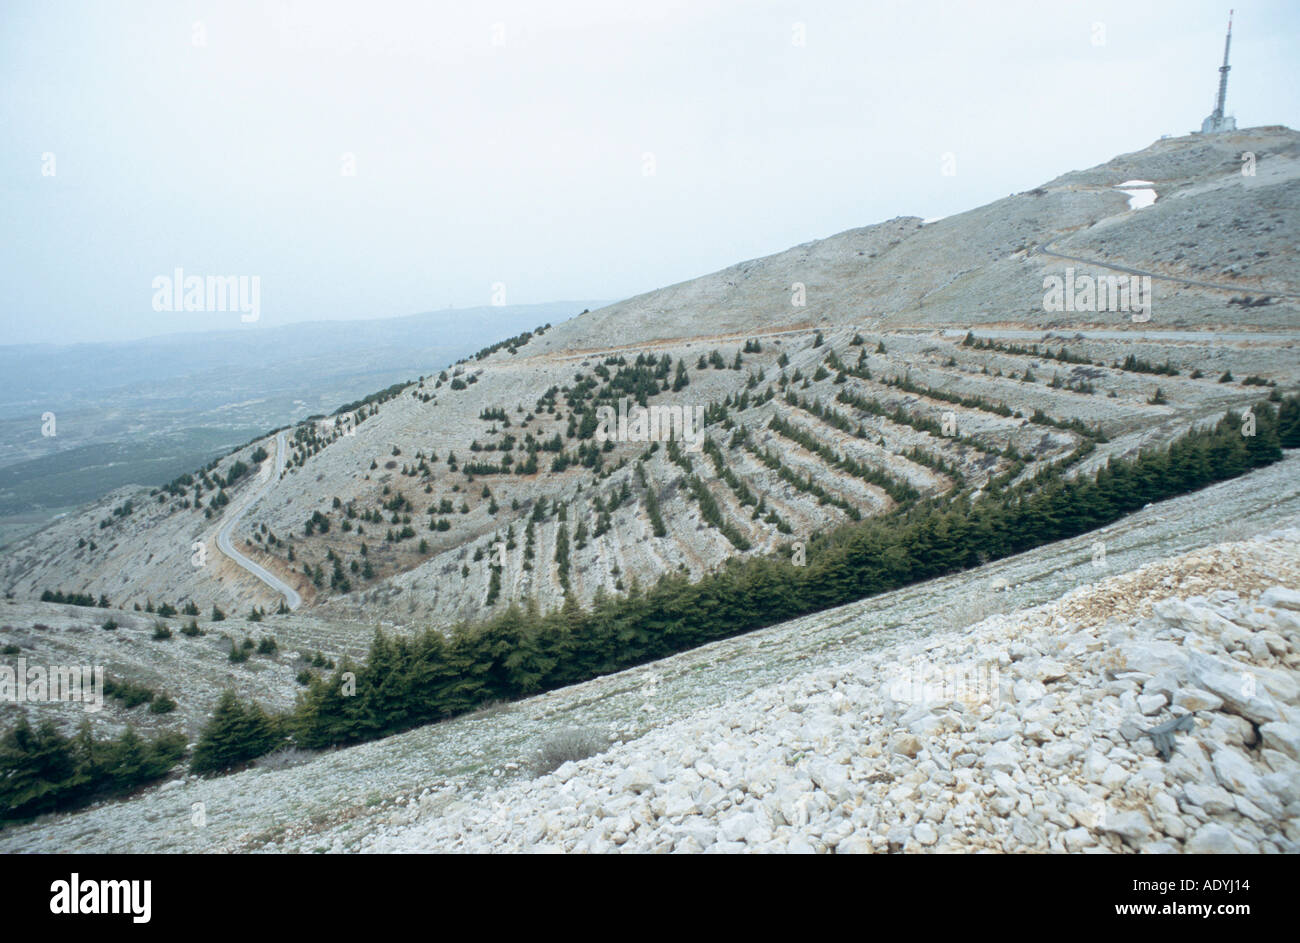 cedar of Lebanon (Cedrus libani), forestation at a slope. Stock Photo